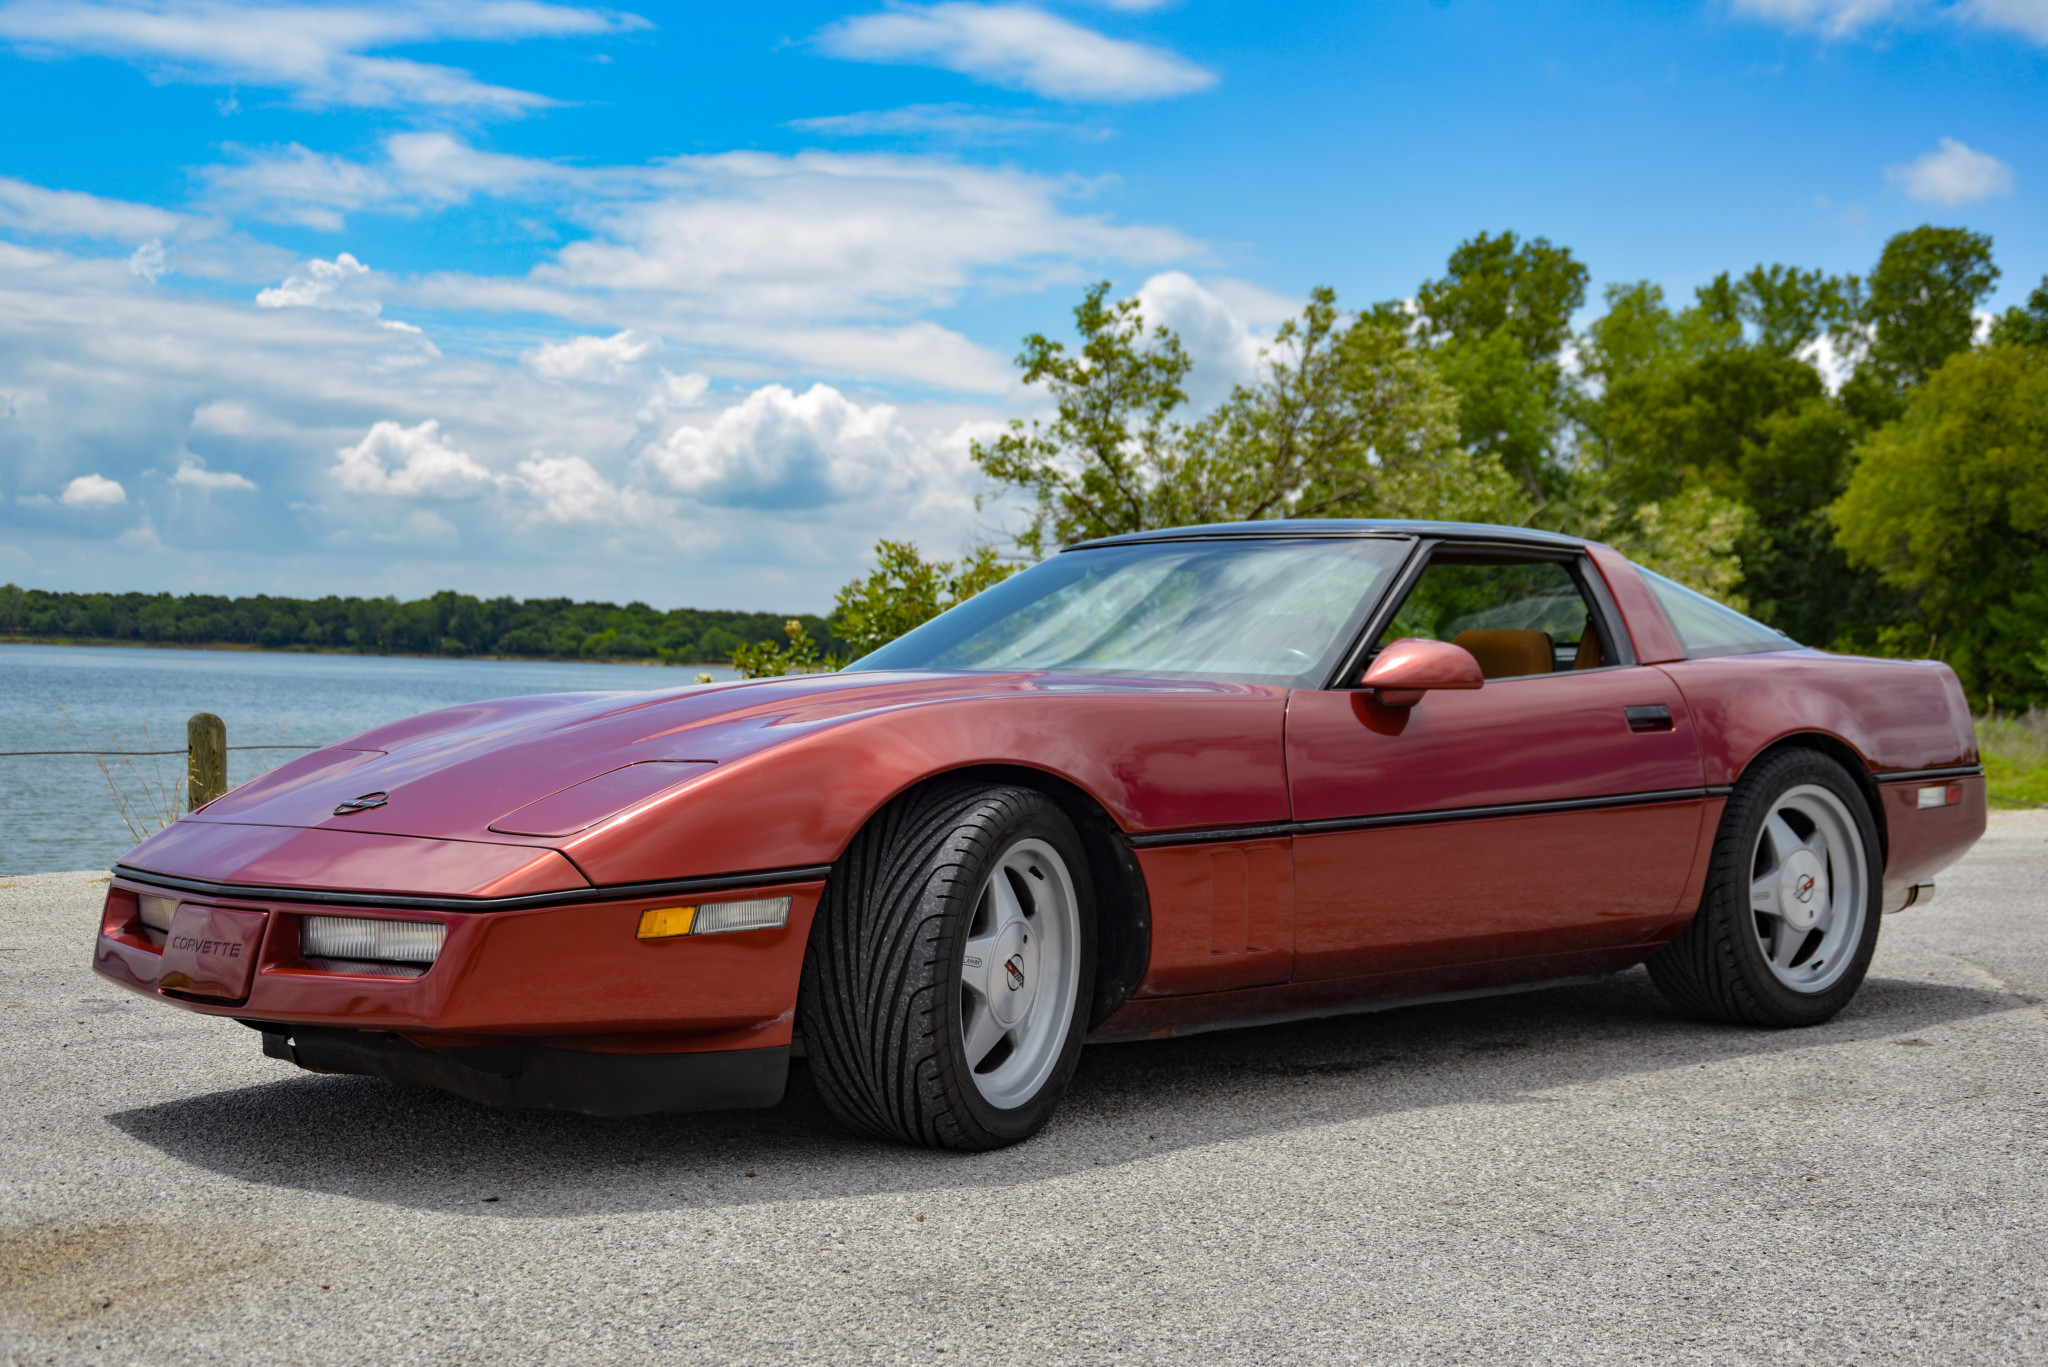 This 1988 Callaway Corvette is for-sale at bringatrailer.com.